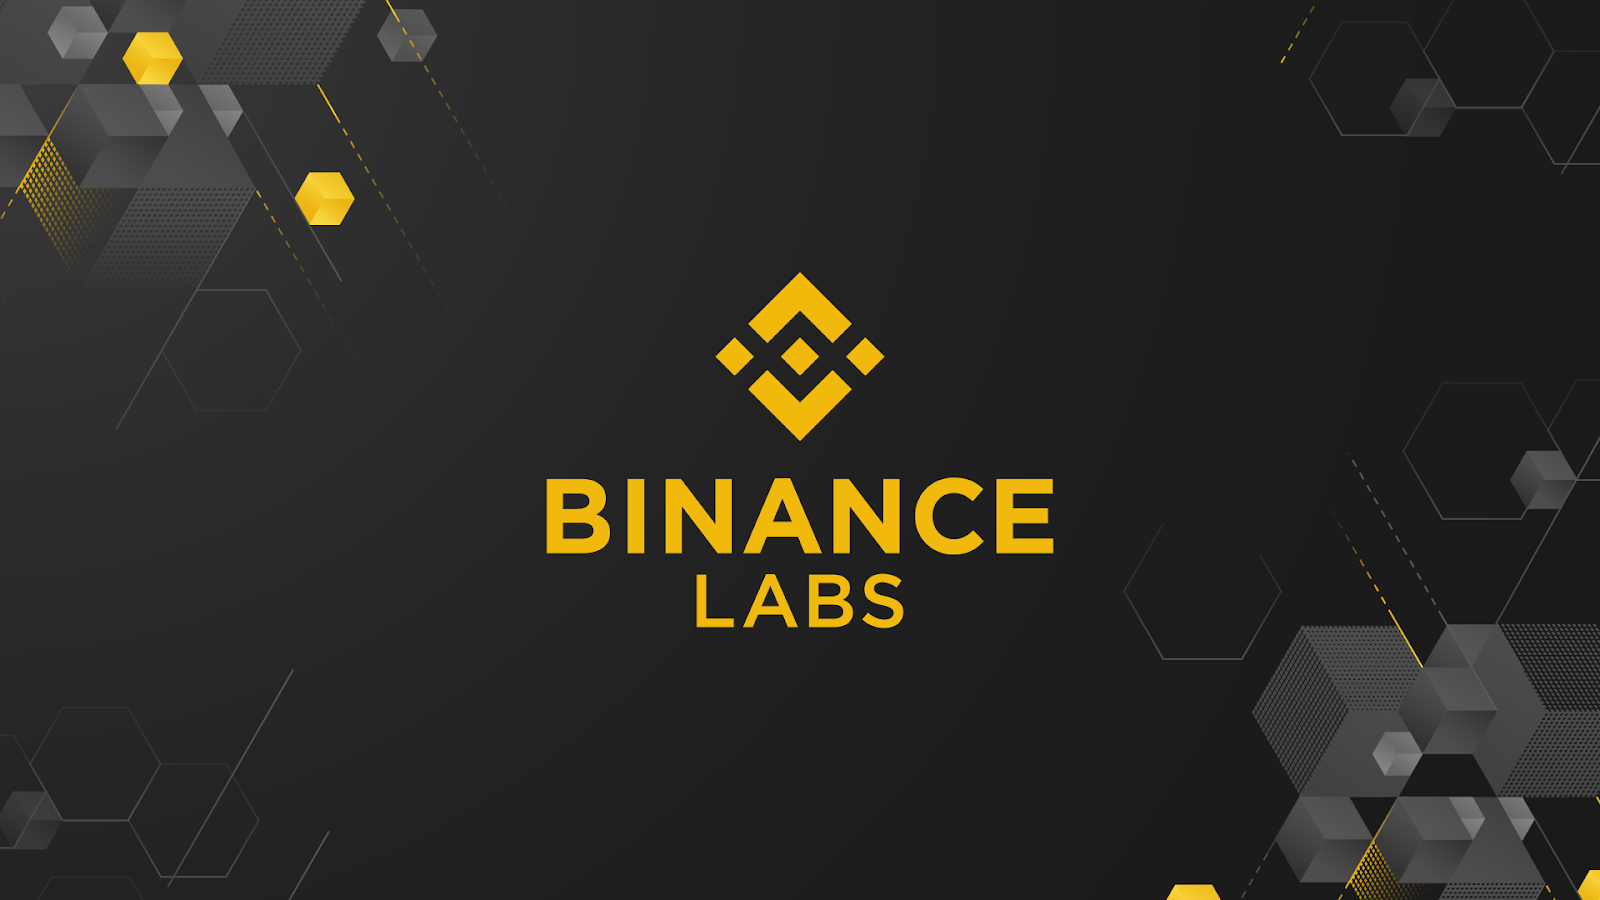 Binance Labs Raises $500 Million from Web3 Fund